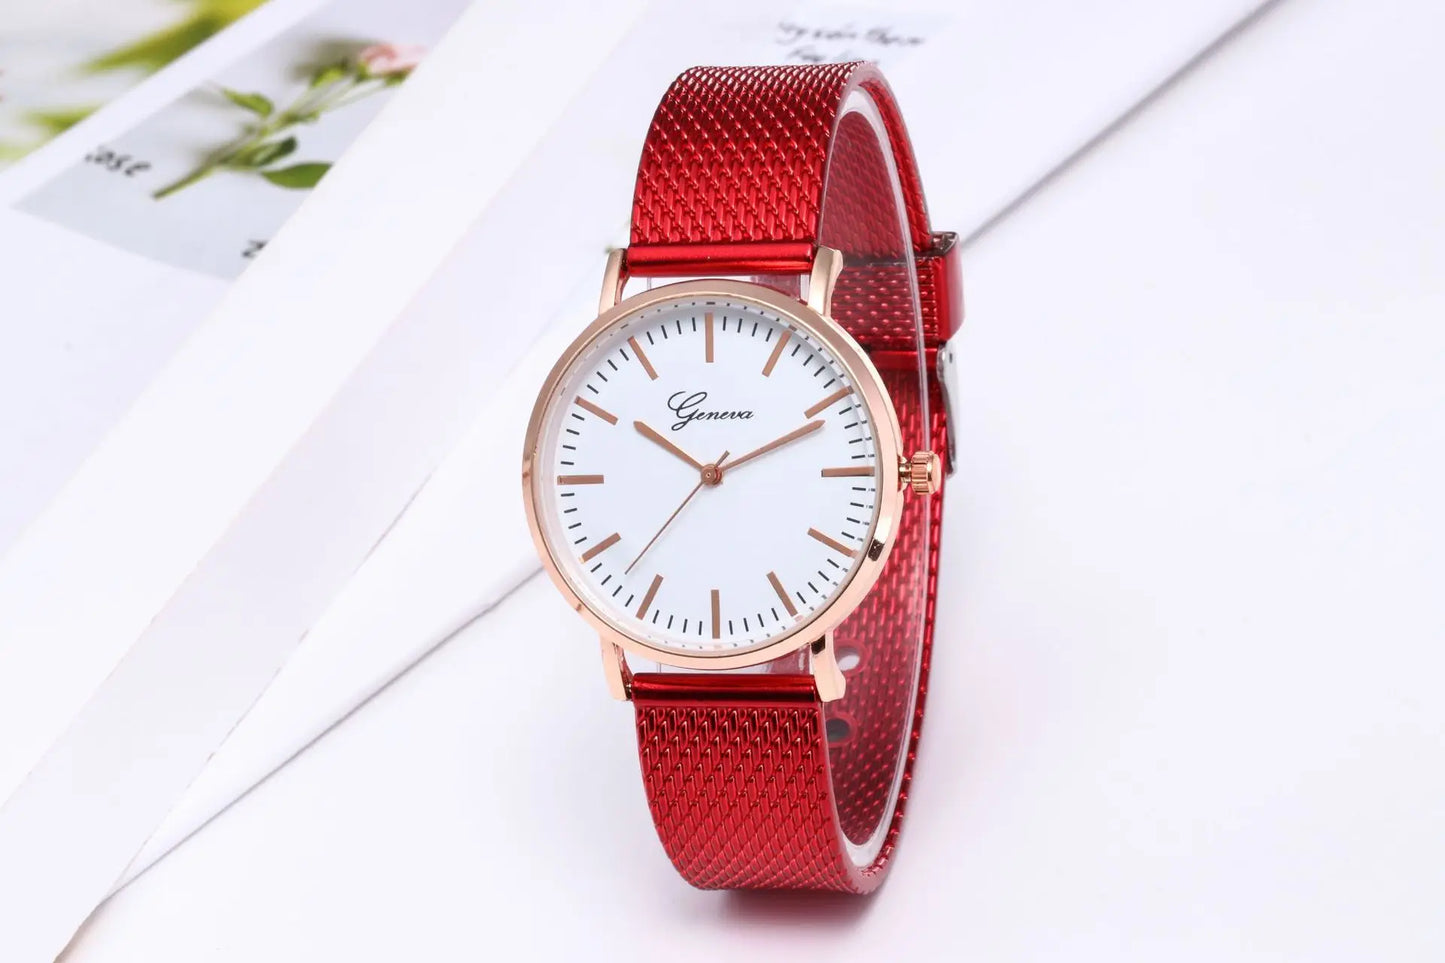 Quarz-Armbanduhr für Damen mit Silikonarmband und Zifferblatt